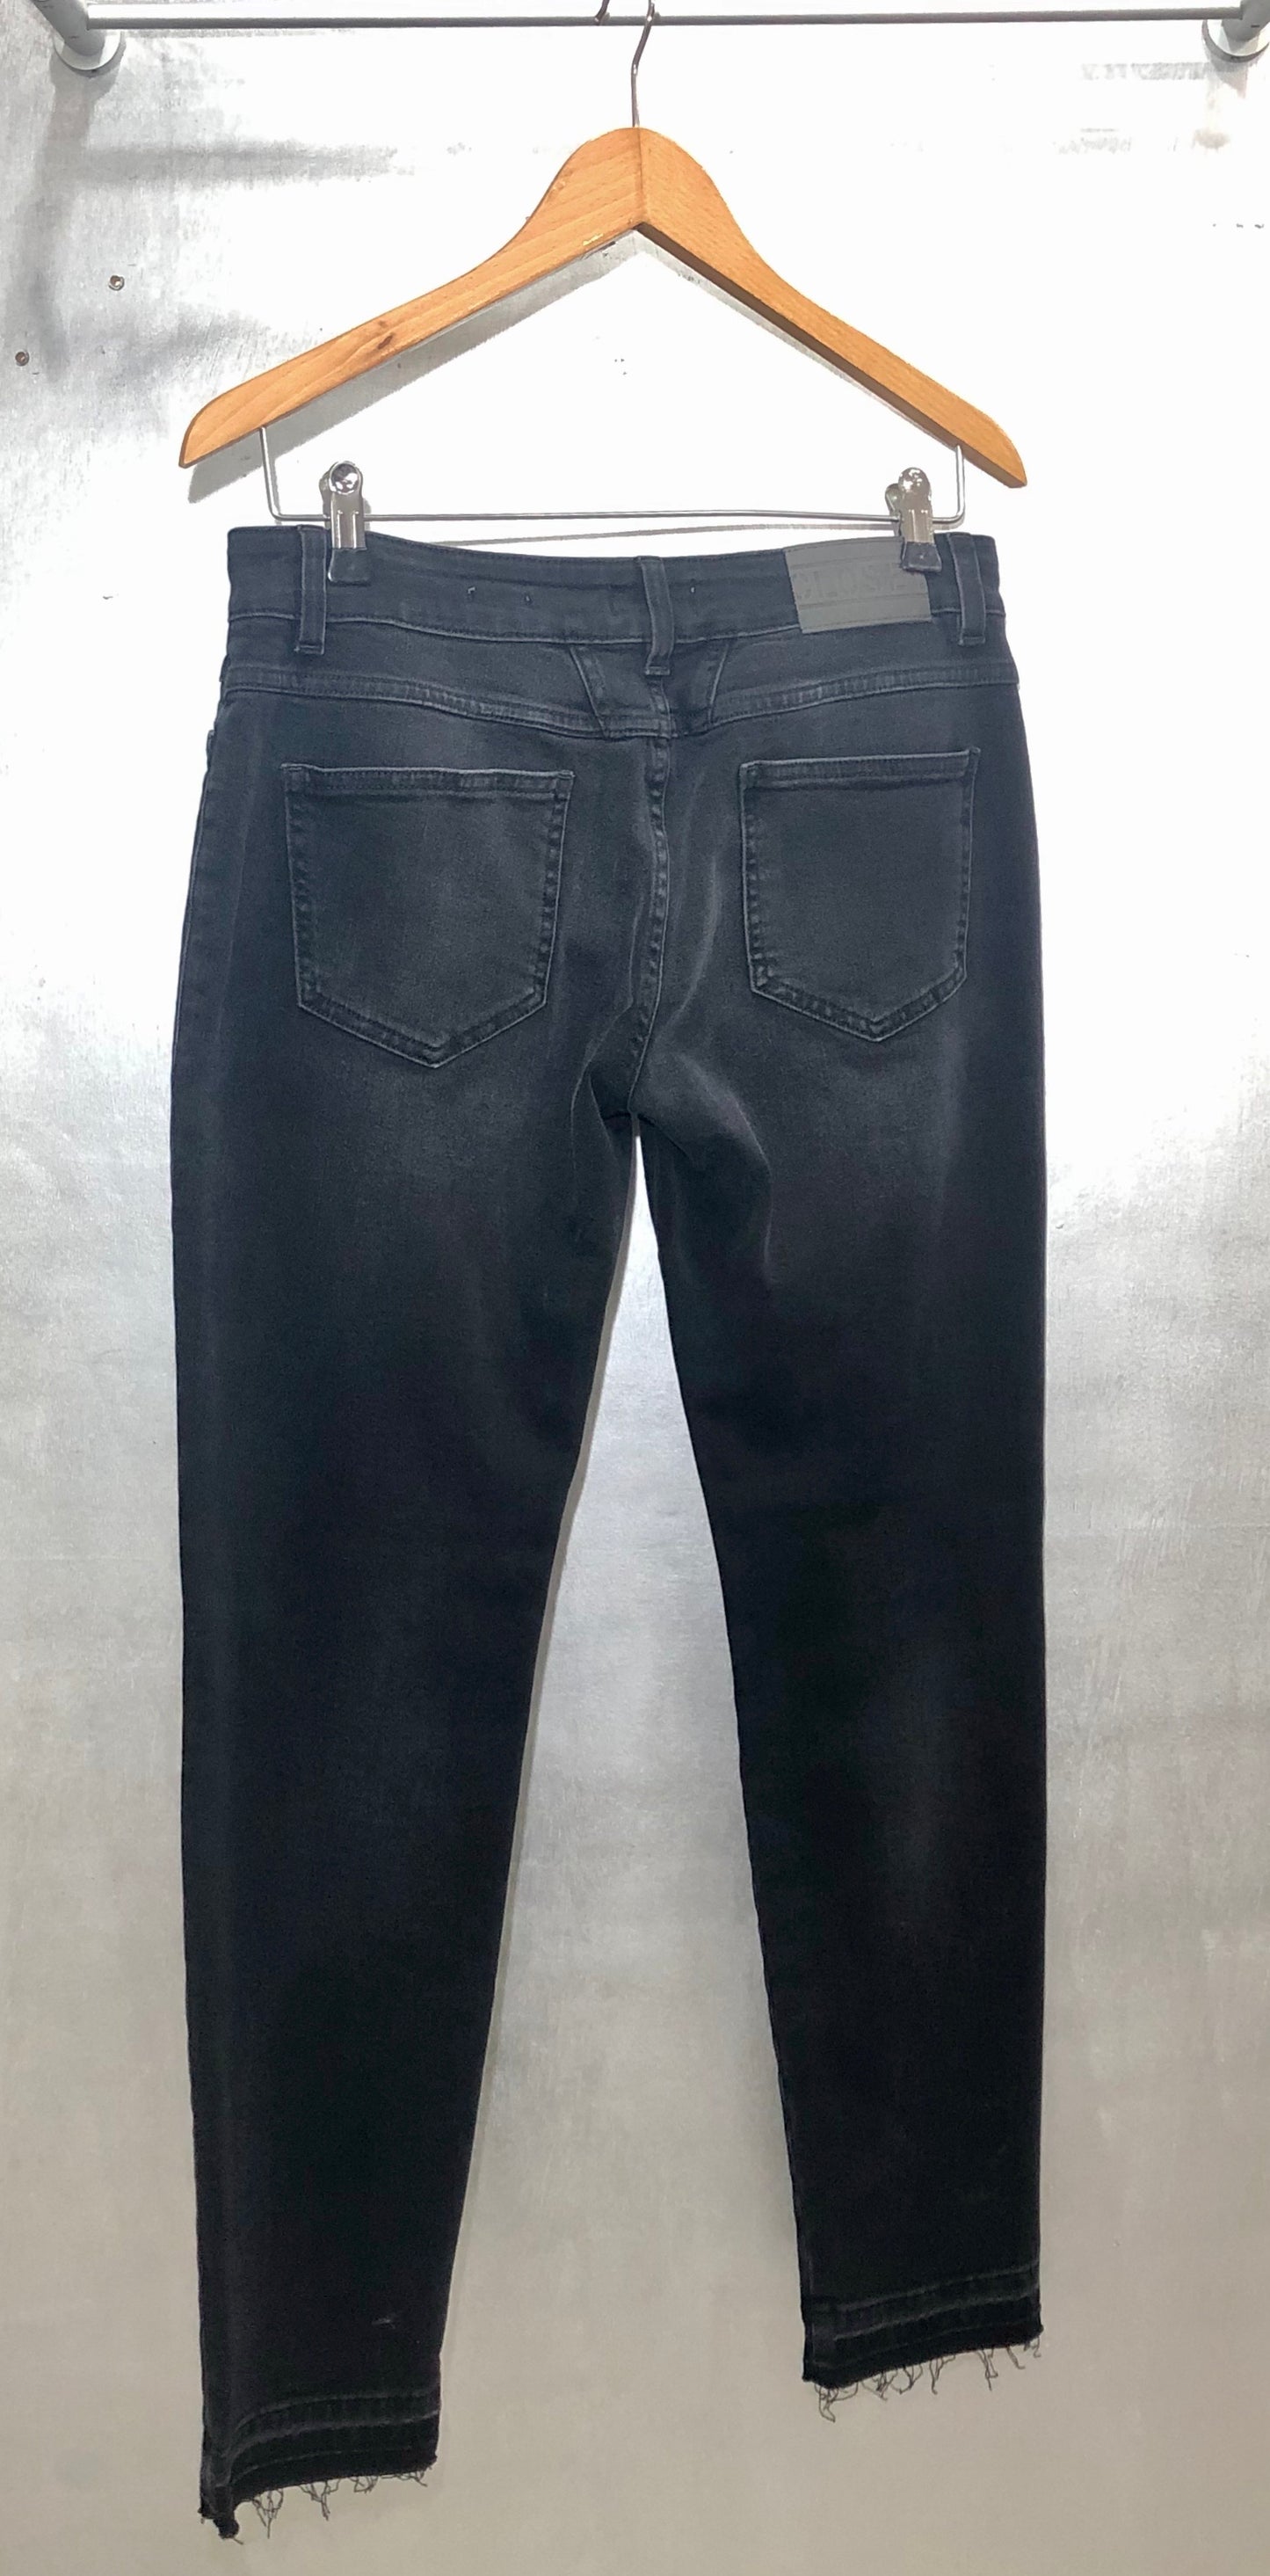 Jeans Pedal X pocket black denim